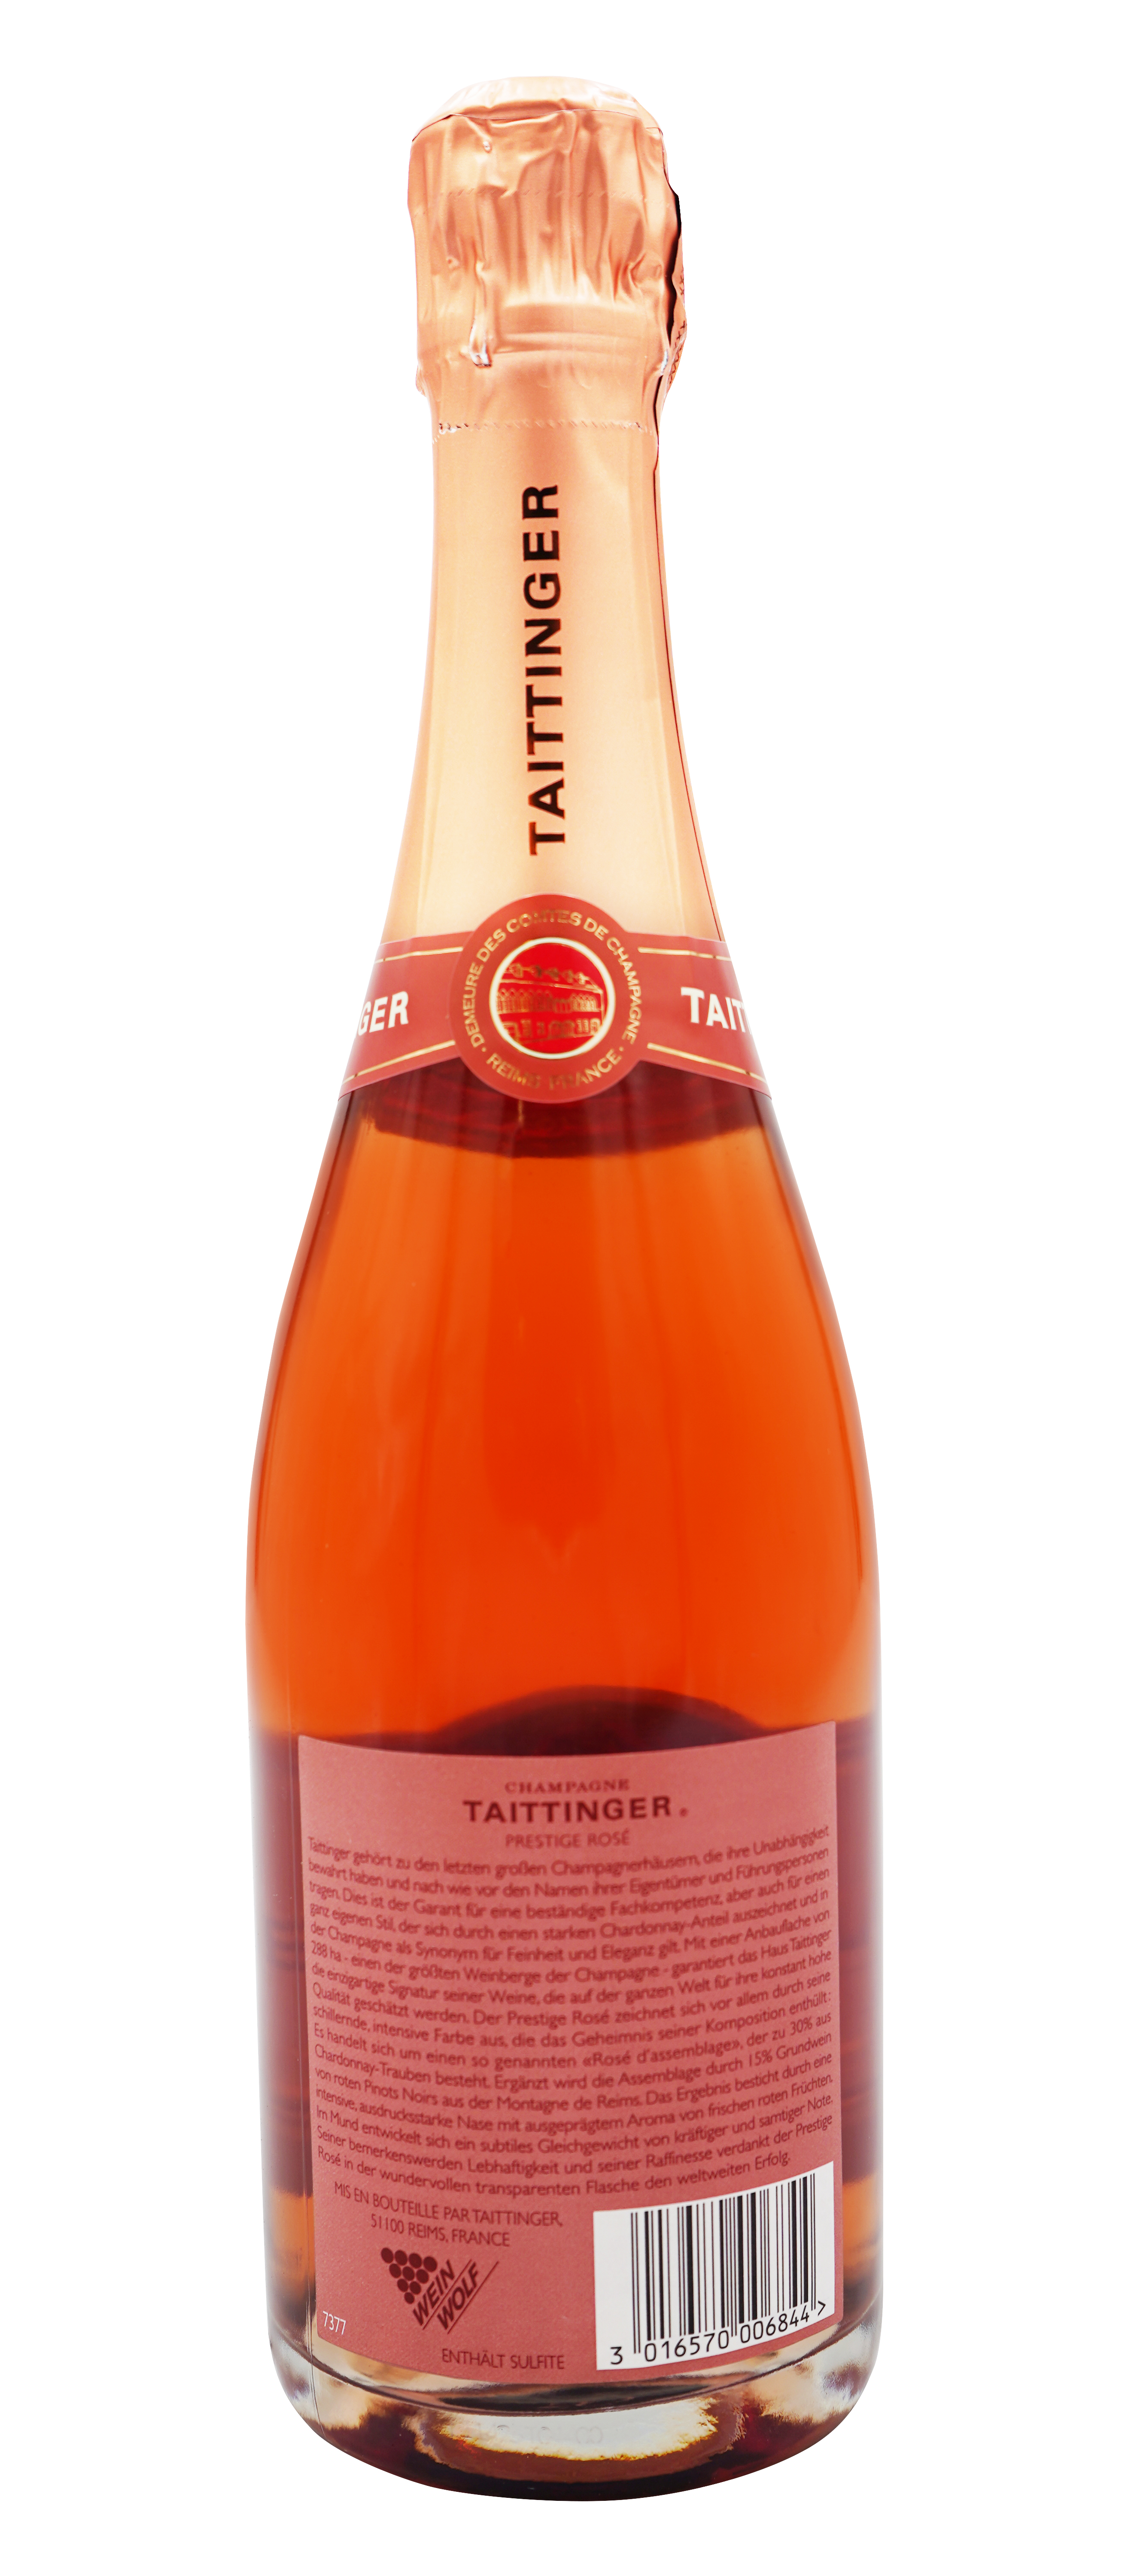 Taittinger Champagner Brut Prestige Rose - back label